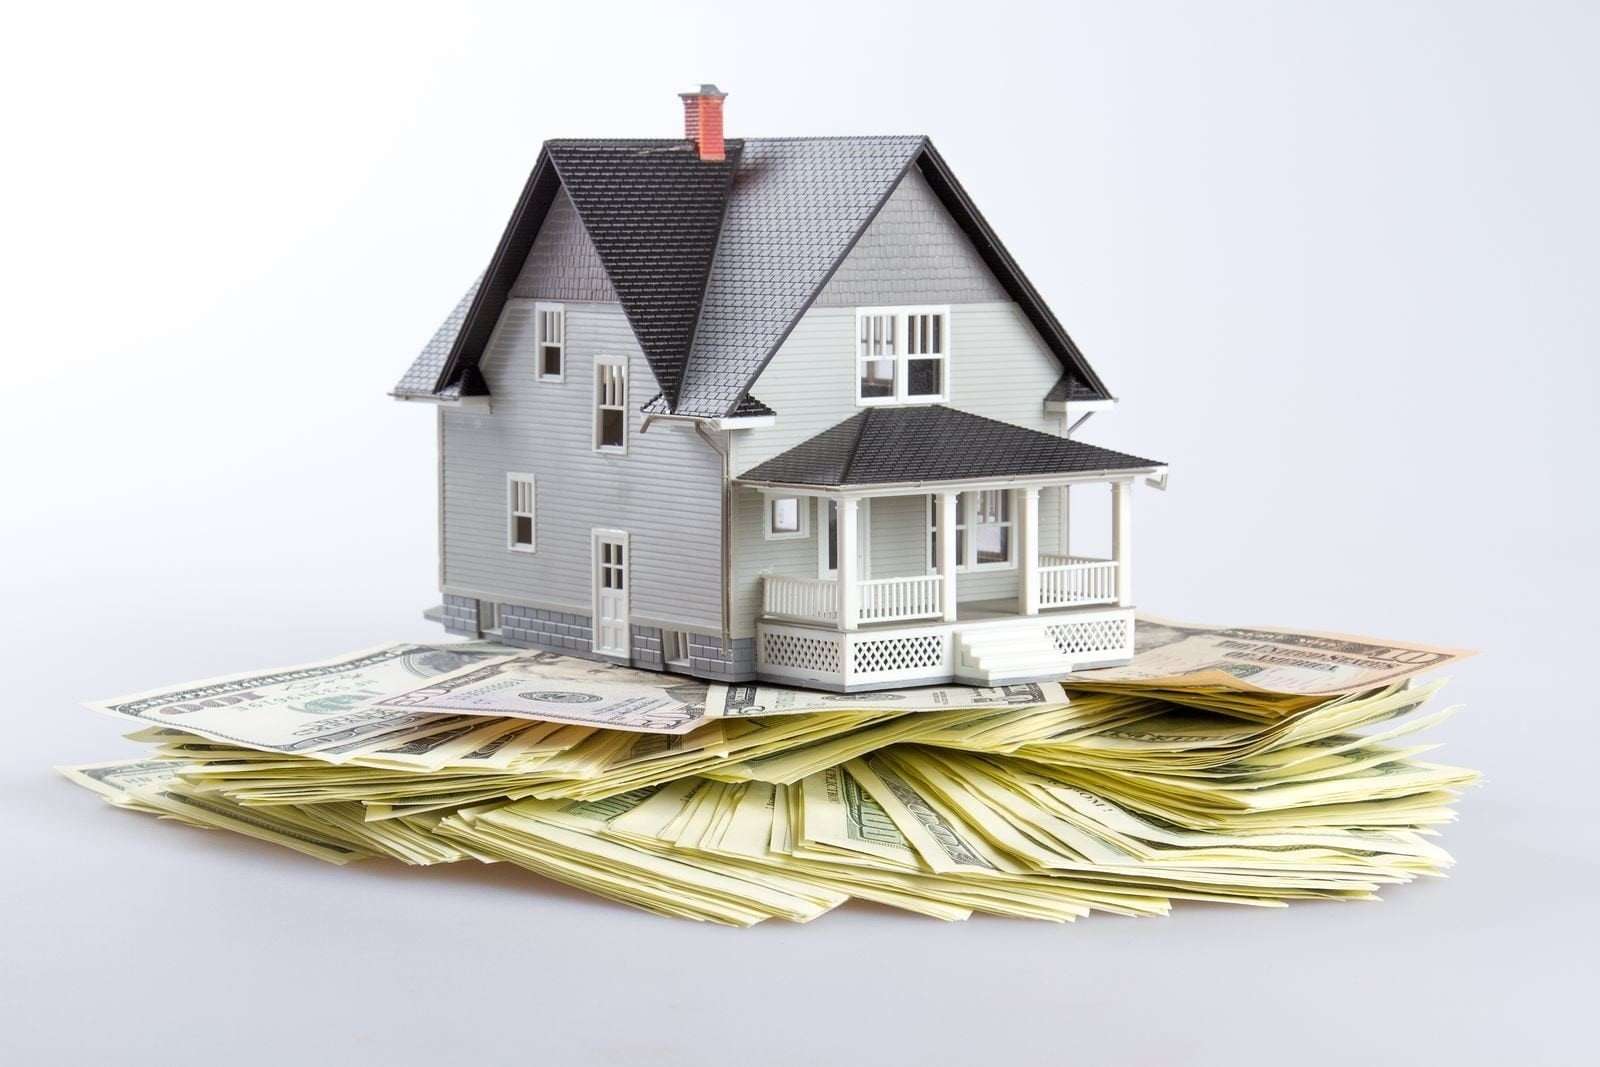 Rental Property Tax Deductions